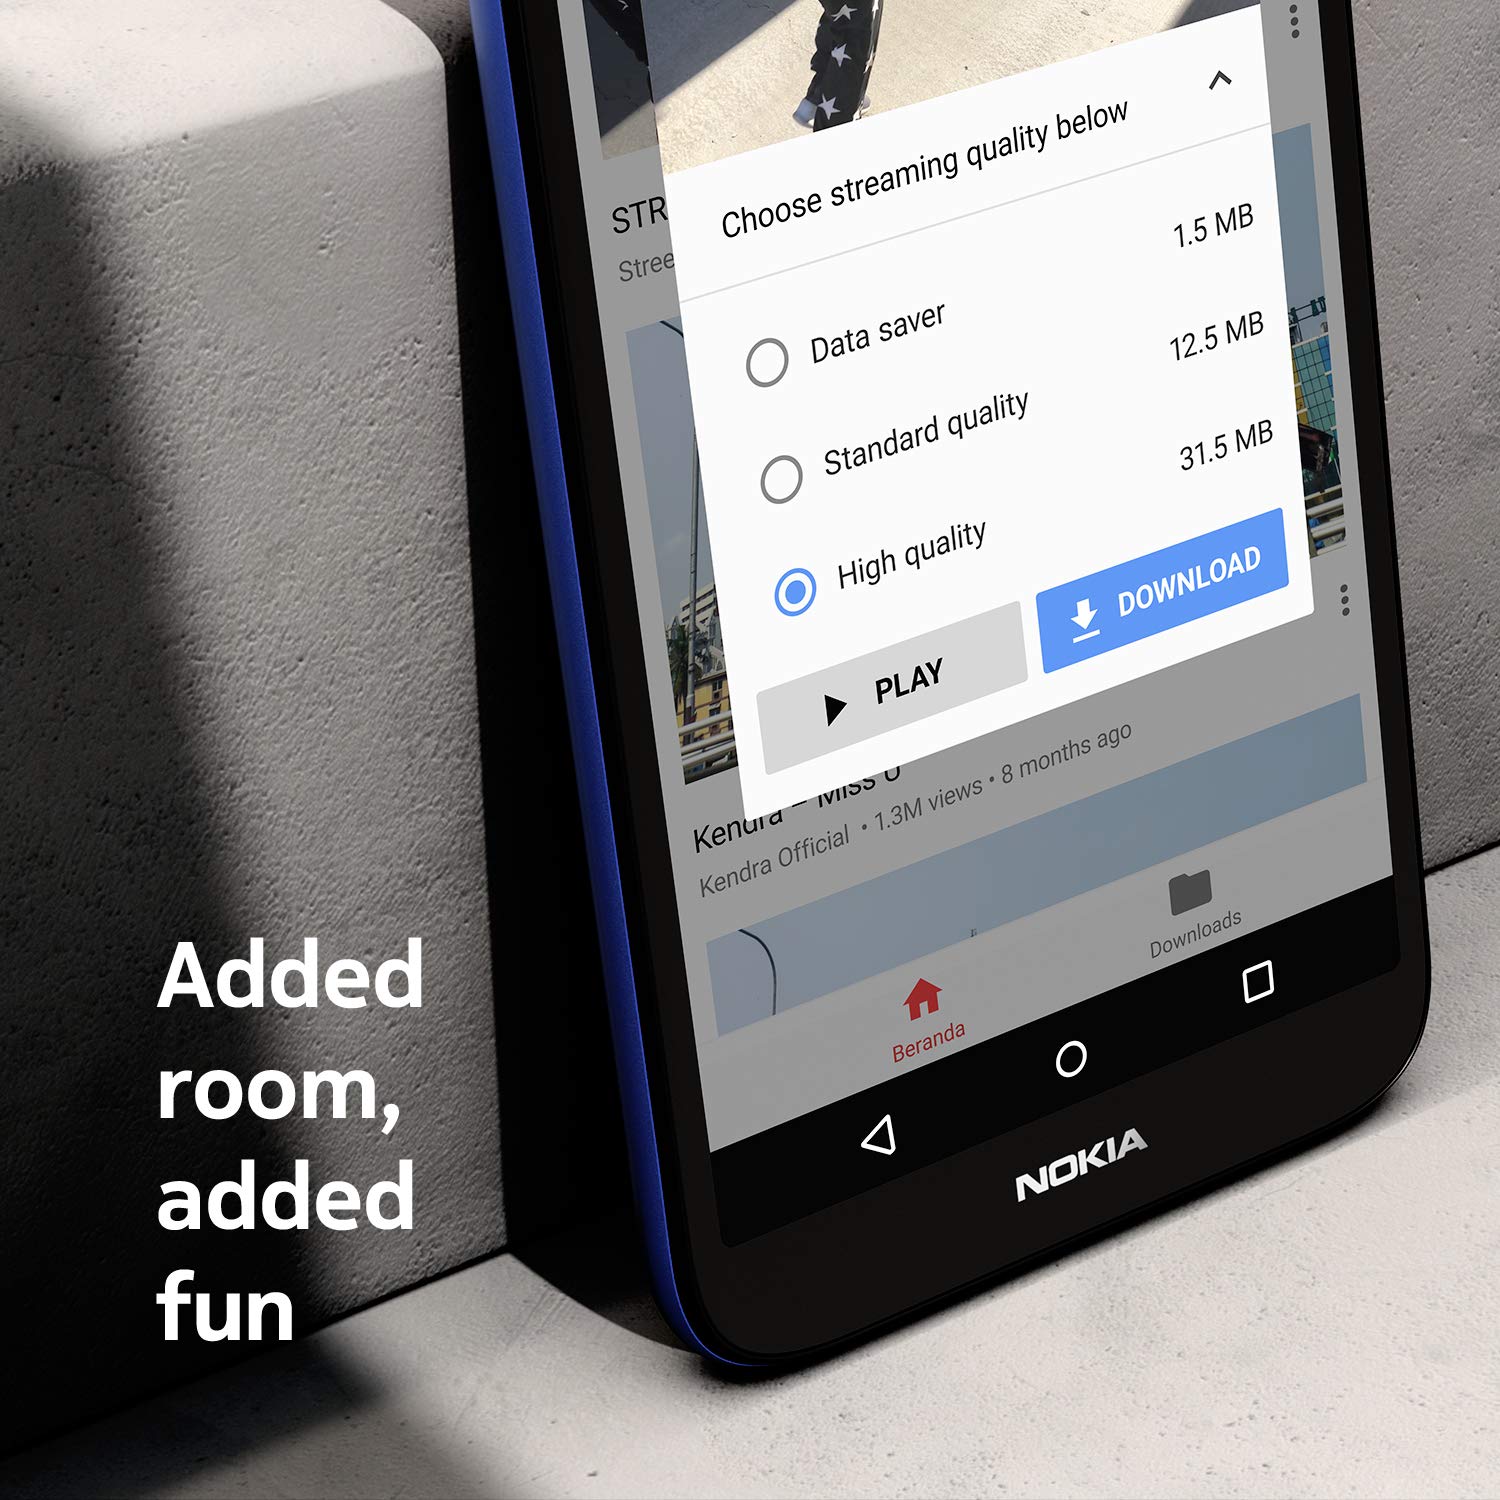 Nokia C1 Plus | Android 10 (Go Edition) | Unlocked Smartphone | 5.45